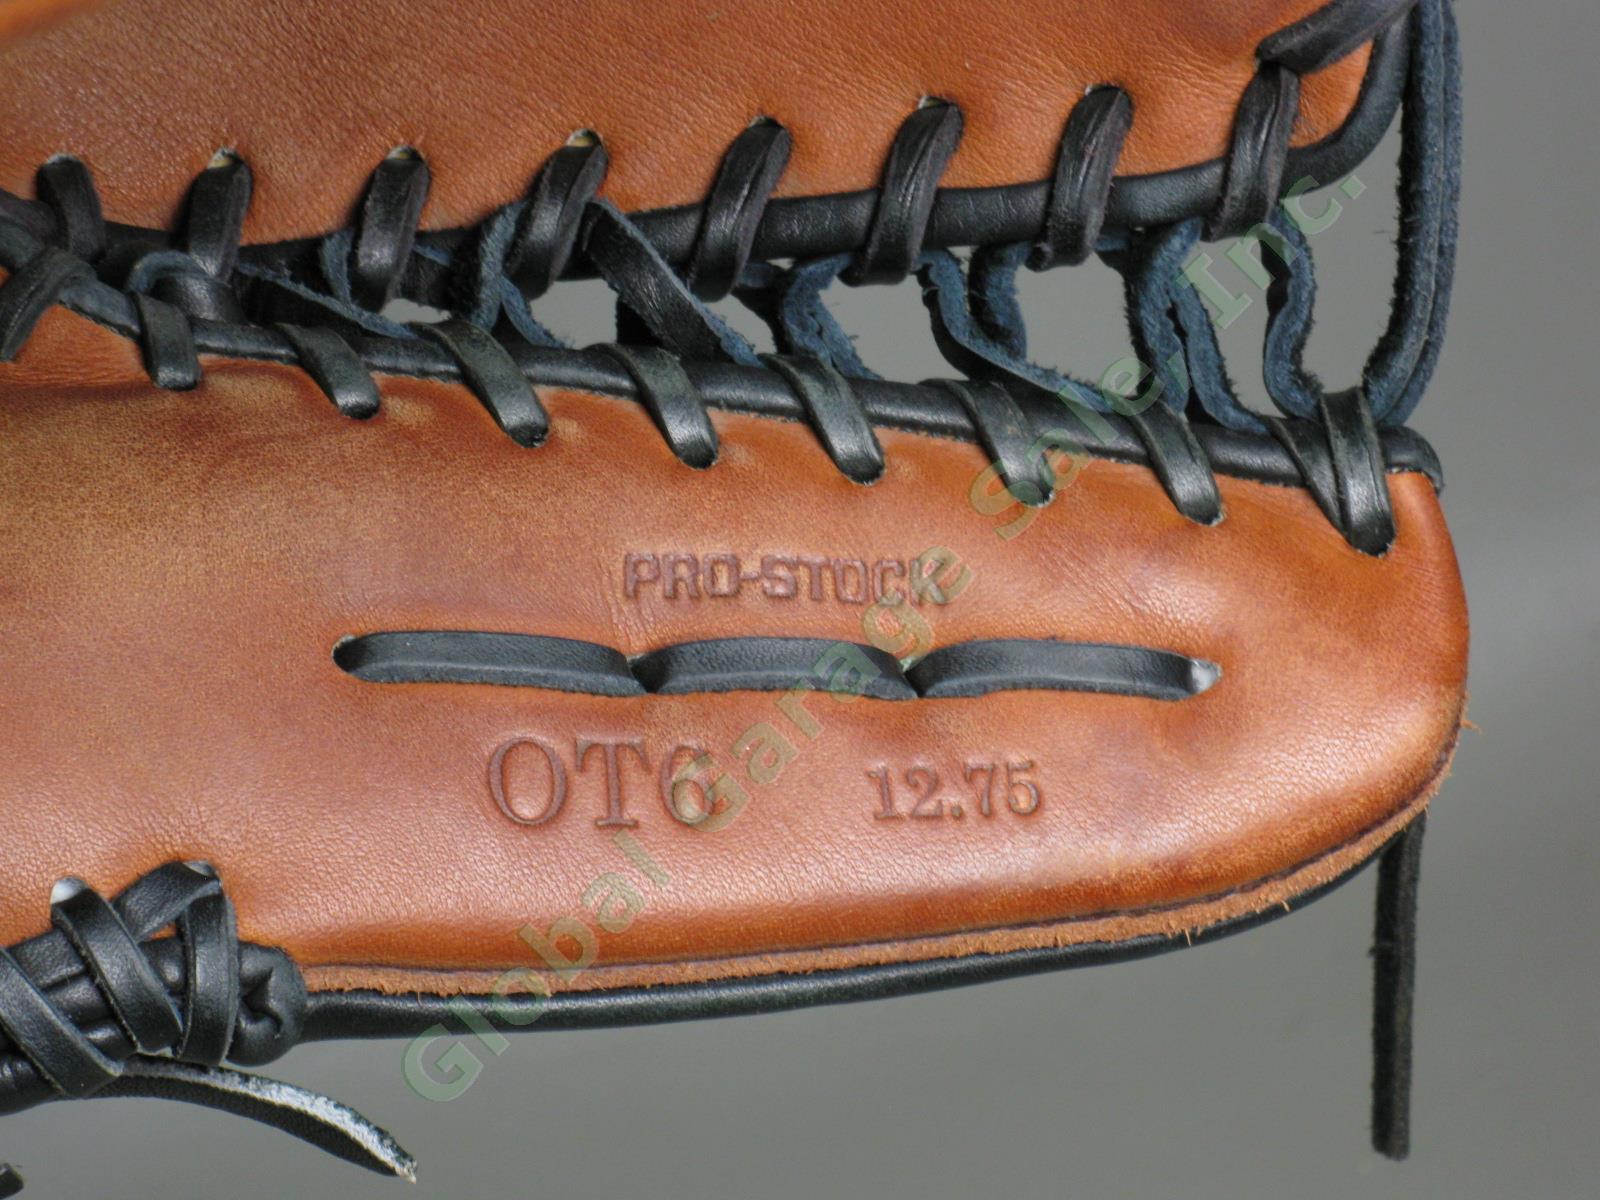 Wilson A2000 OT6 12.75” Left Hand Lefty LHT Baseball Glove Black Exc Cond! NR! 6